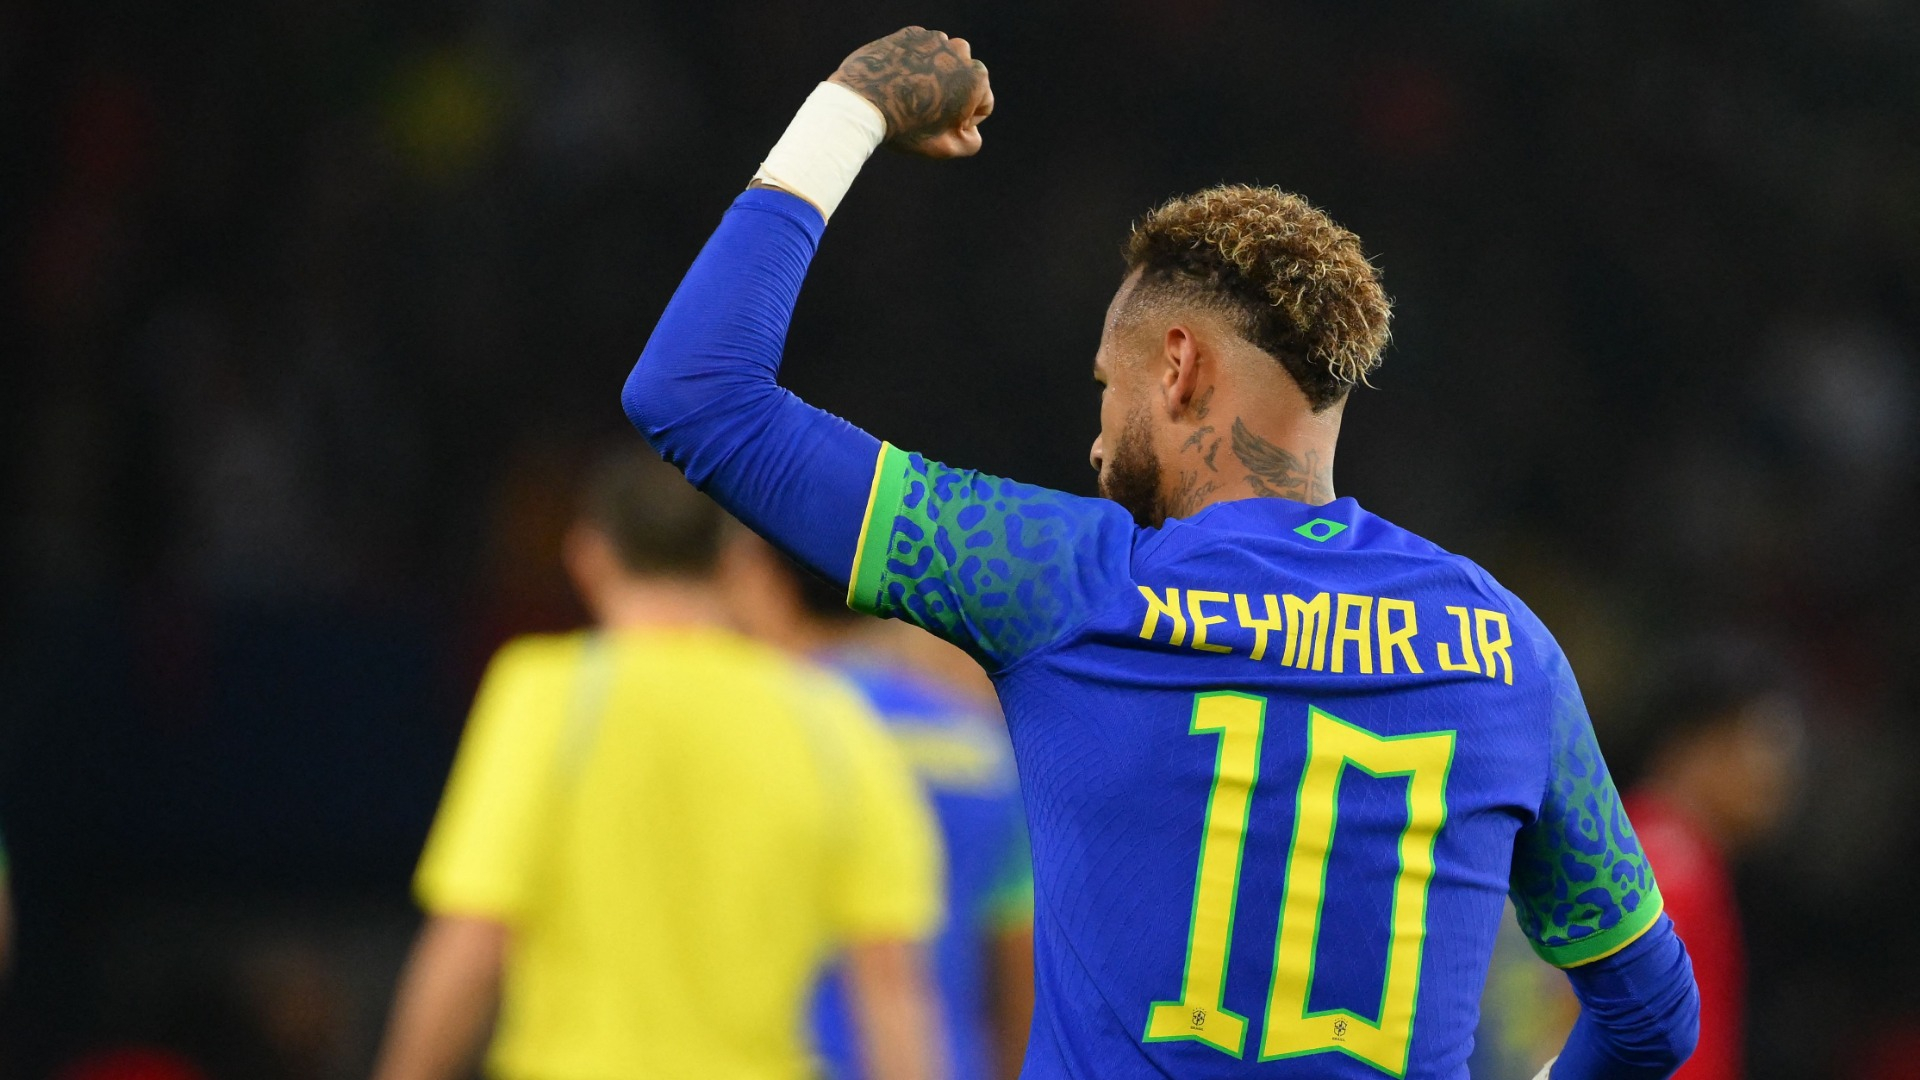 Neymar closes the gap on Pele as the Selecao cruises in Paris